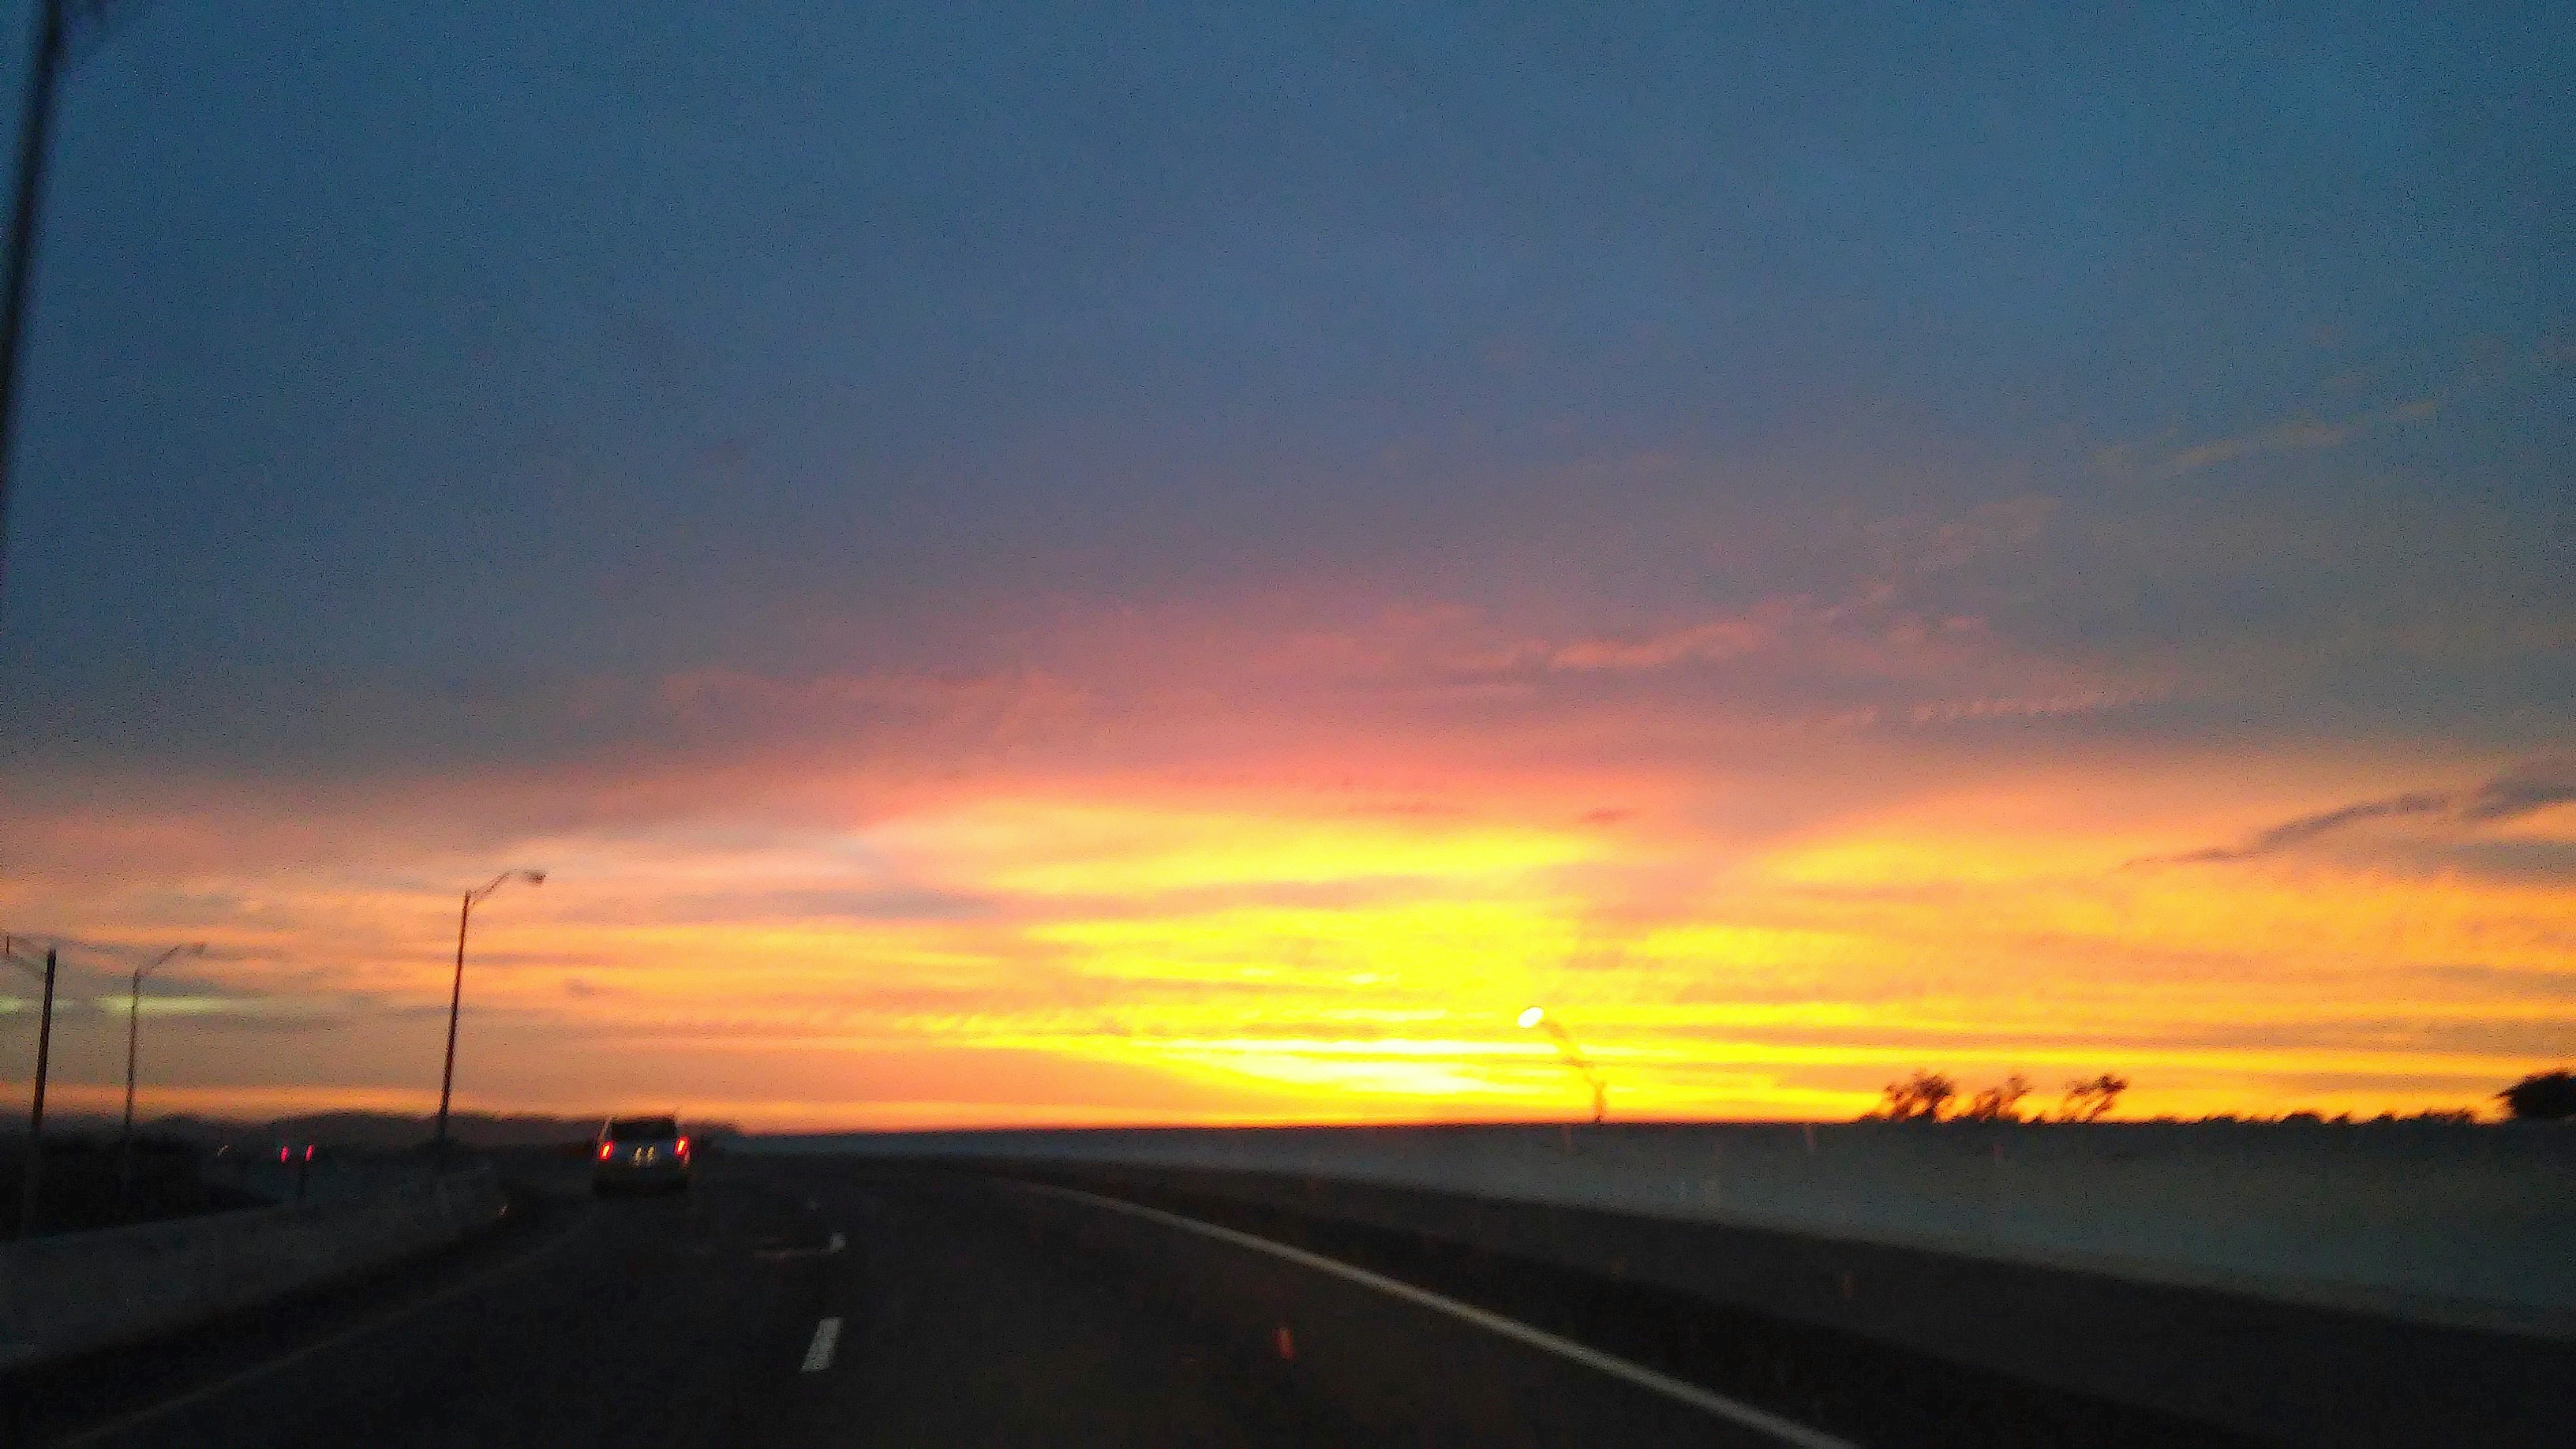 Sunset on Freeway May 27th, 2015 